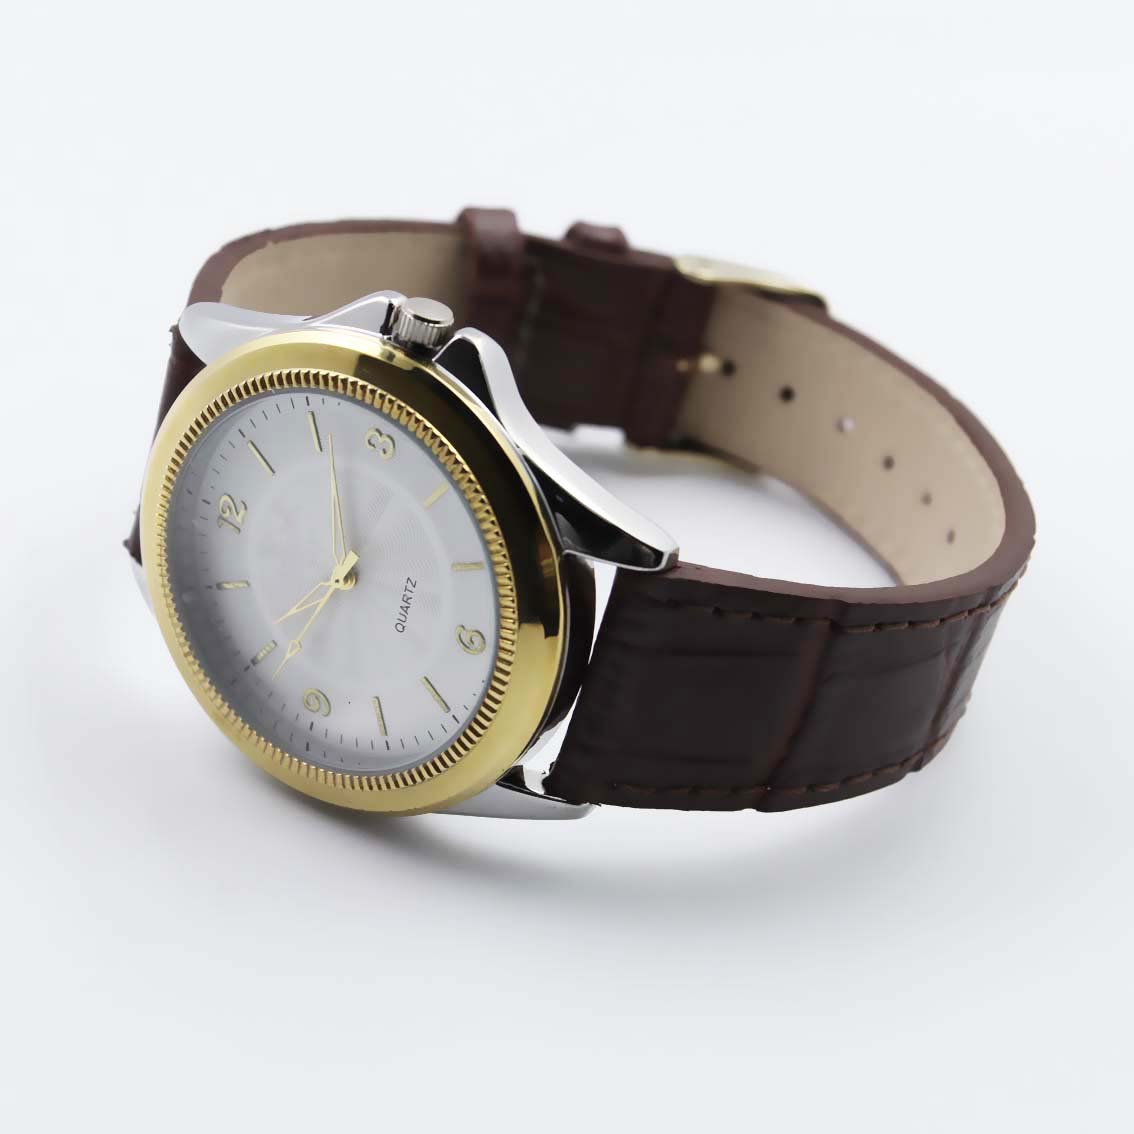 #02016Men's wristwatch quartz analog leather strap watch